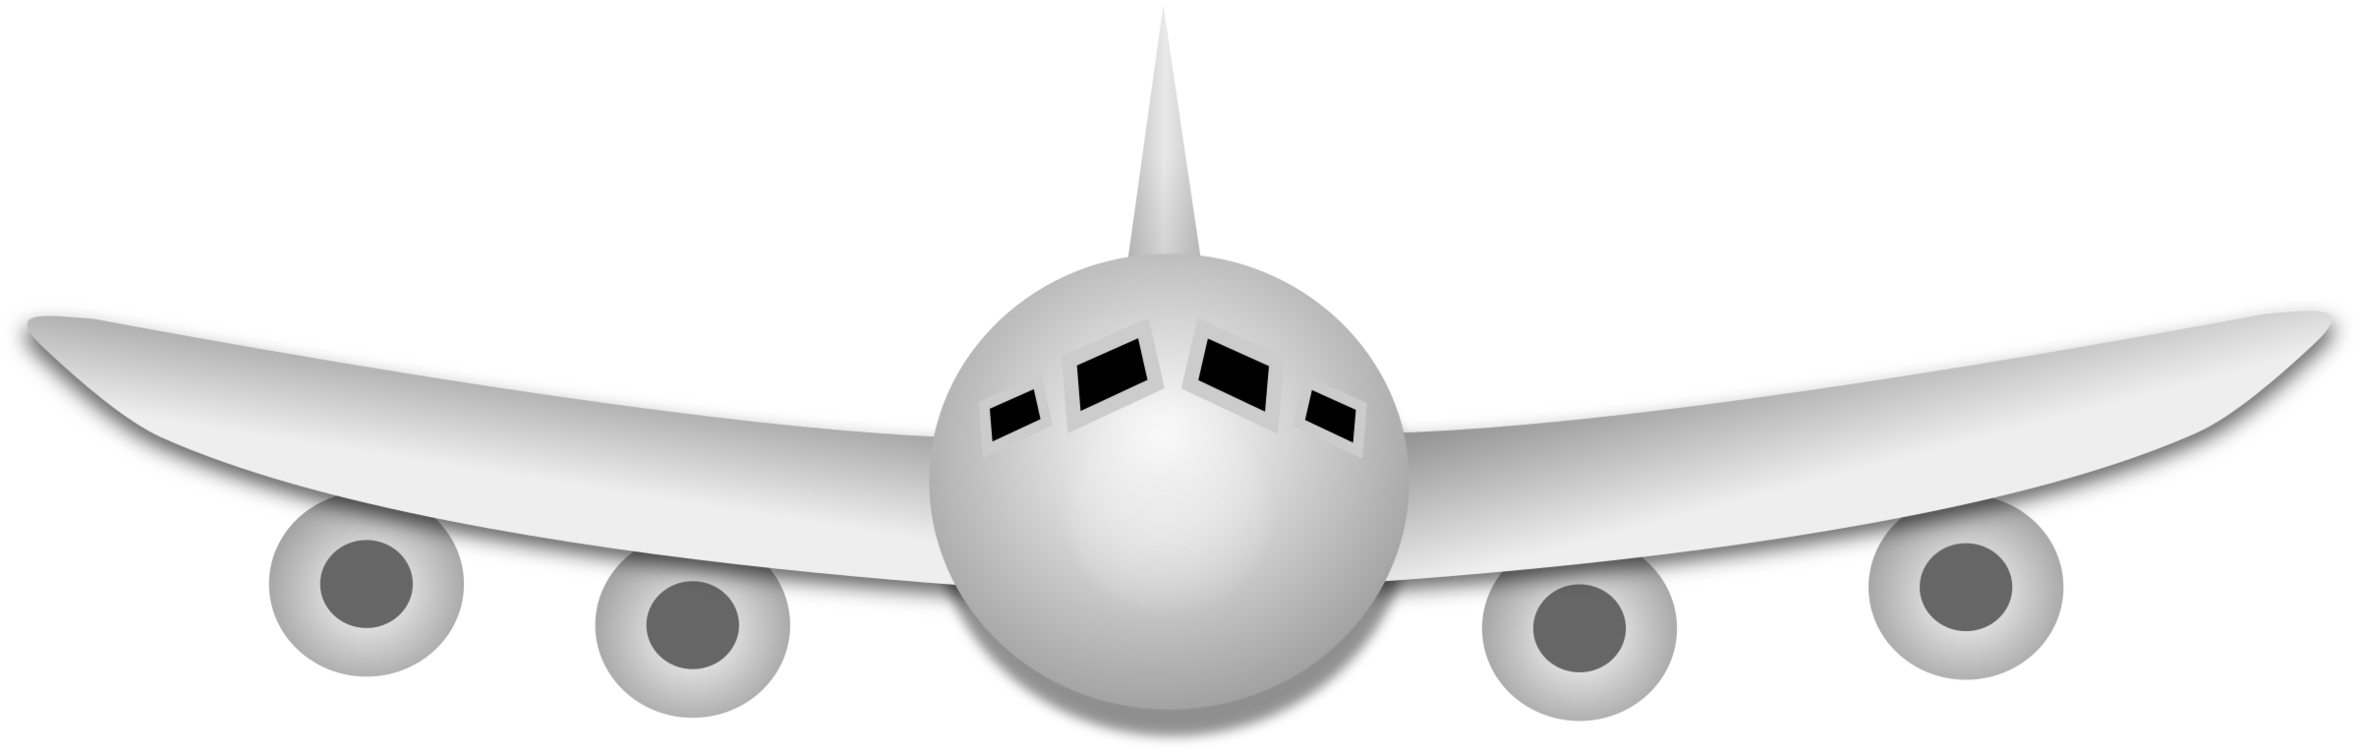 Lighting Accessory,Aircraft,Propeller